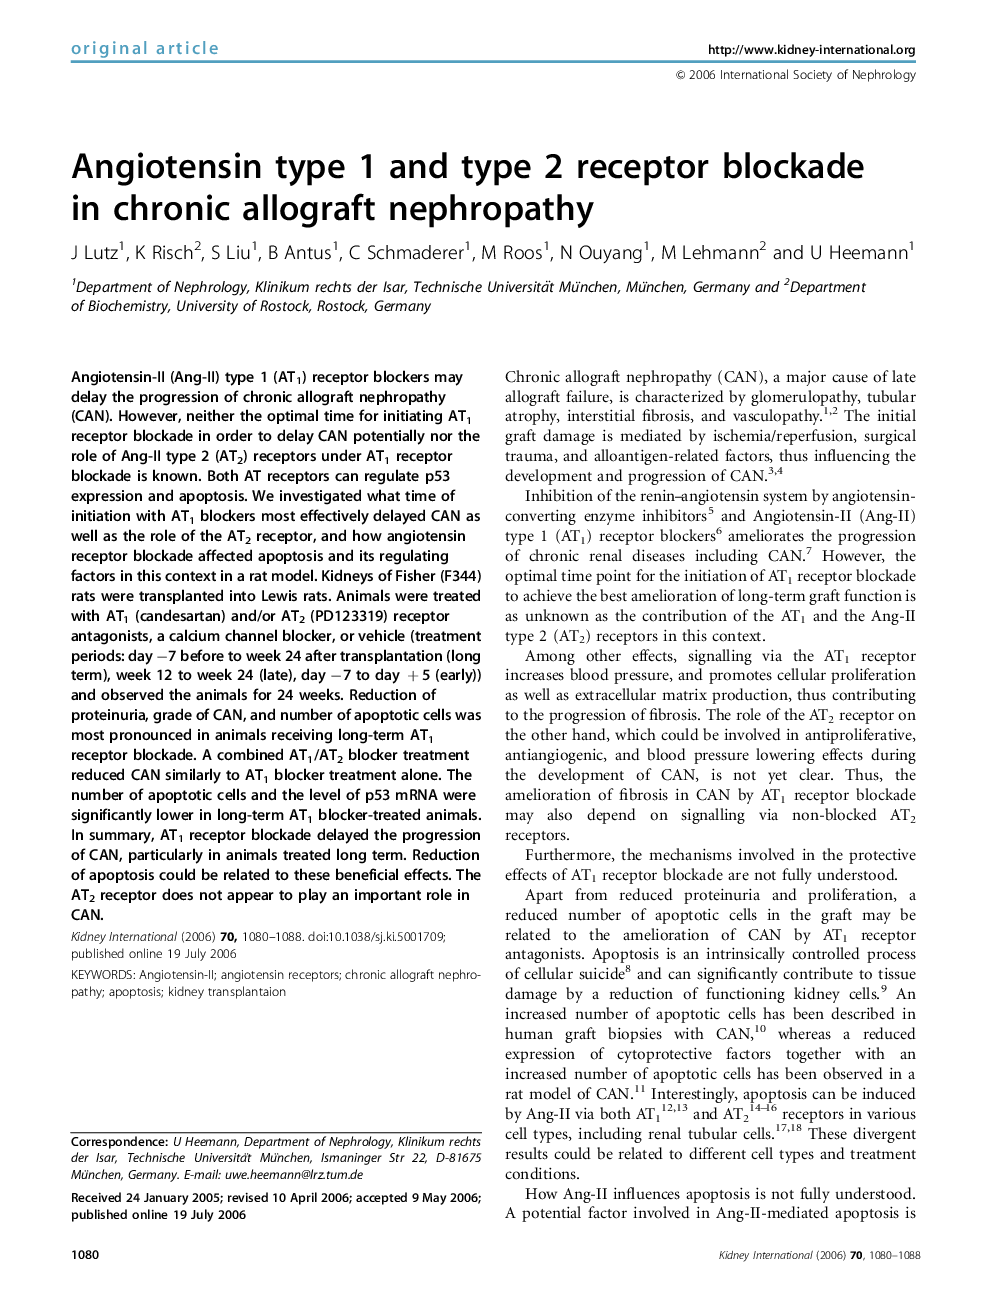 Angiotensin type 1 and type 2 receptor blockade in chronic allograft nephropathy